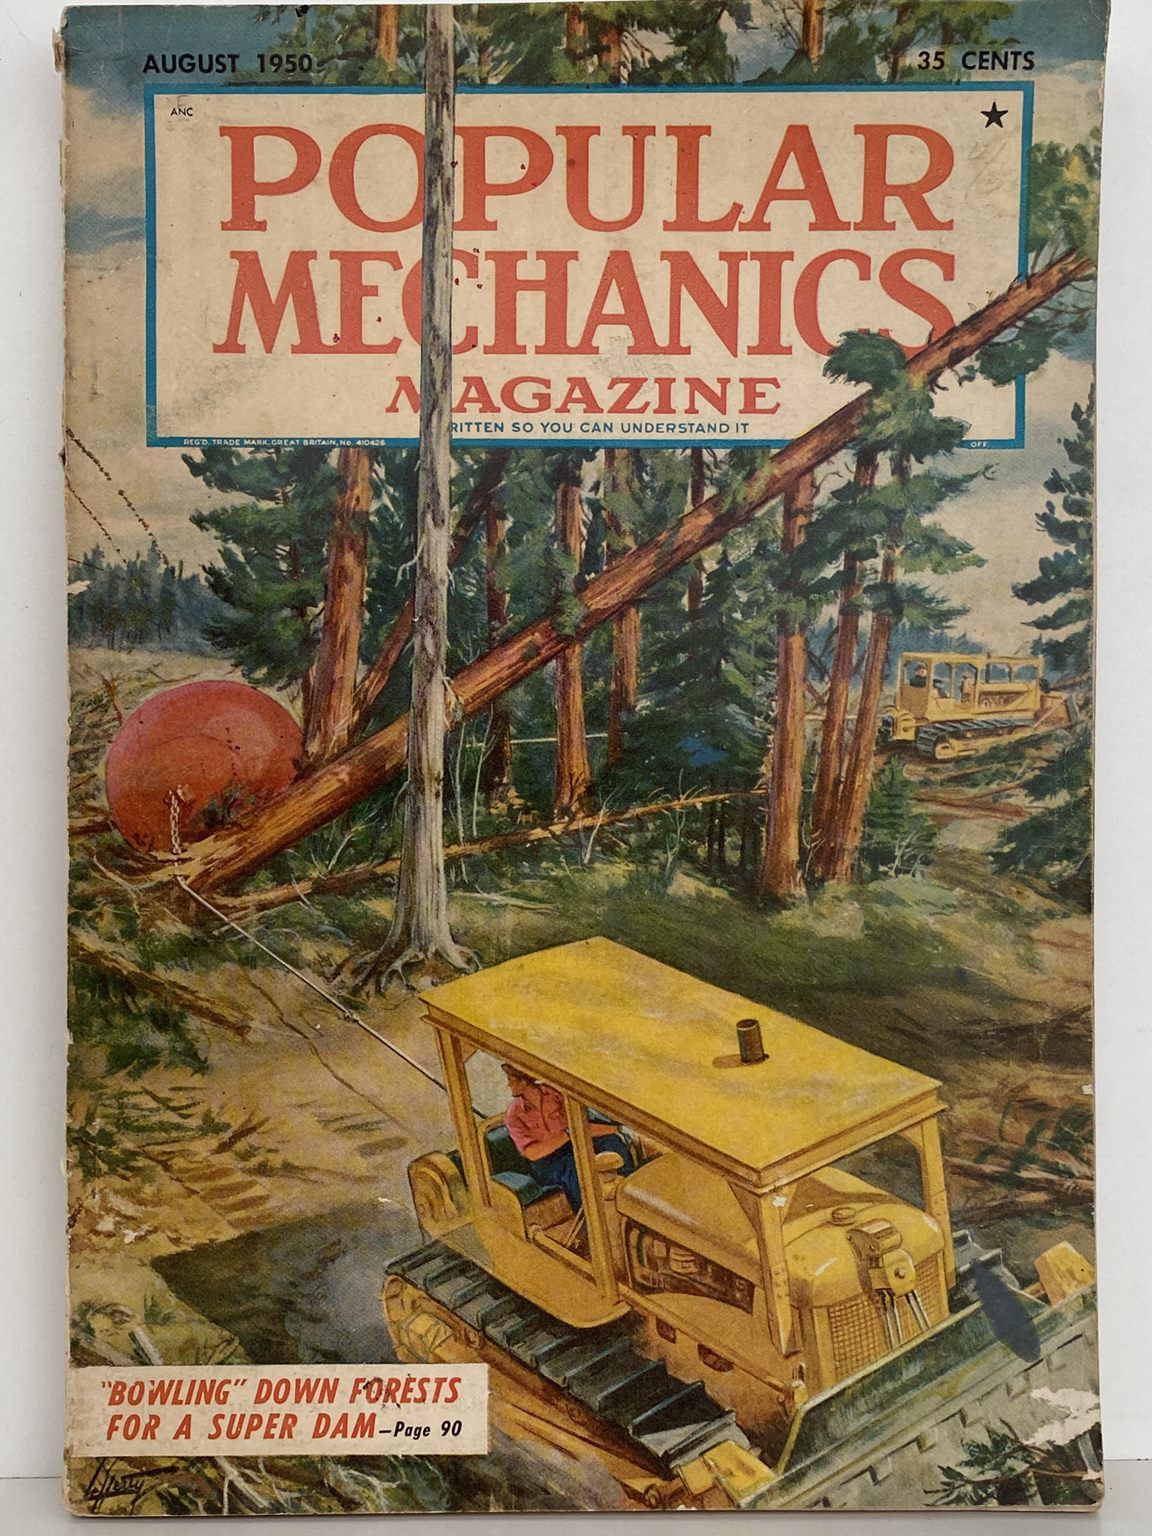 VINTAGE MAGAZINE: Popular Mechanics - Vol. 94, No. 2 - August 1950